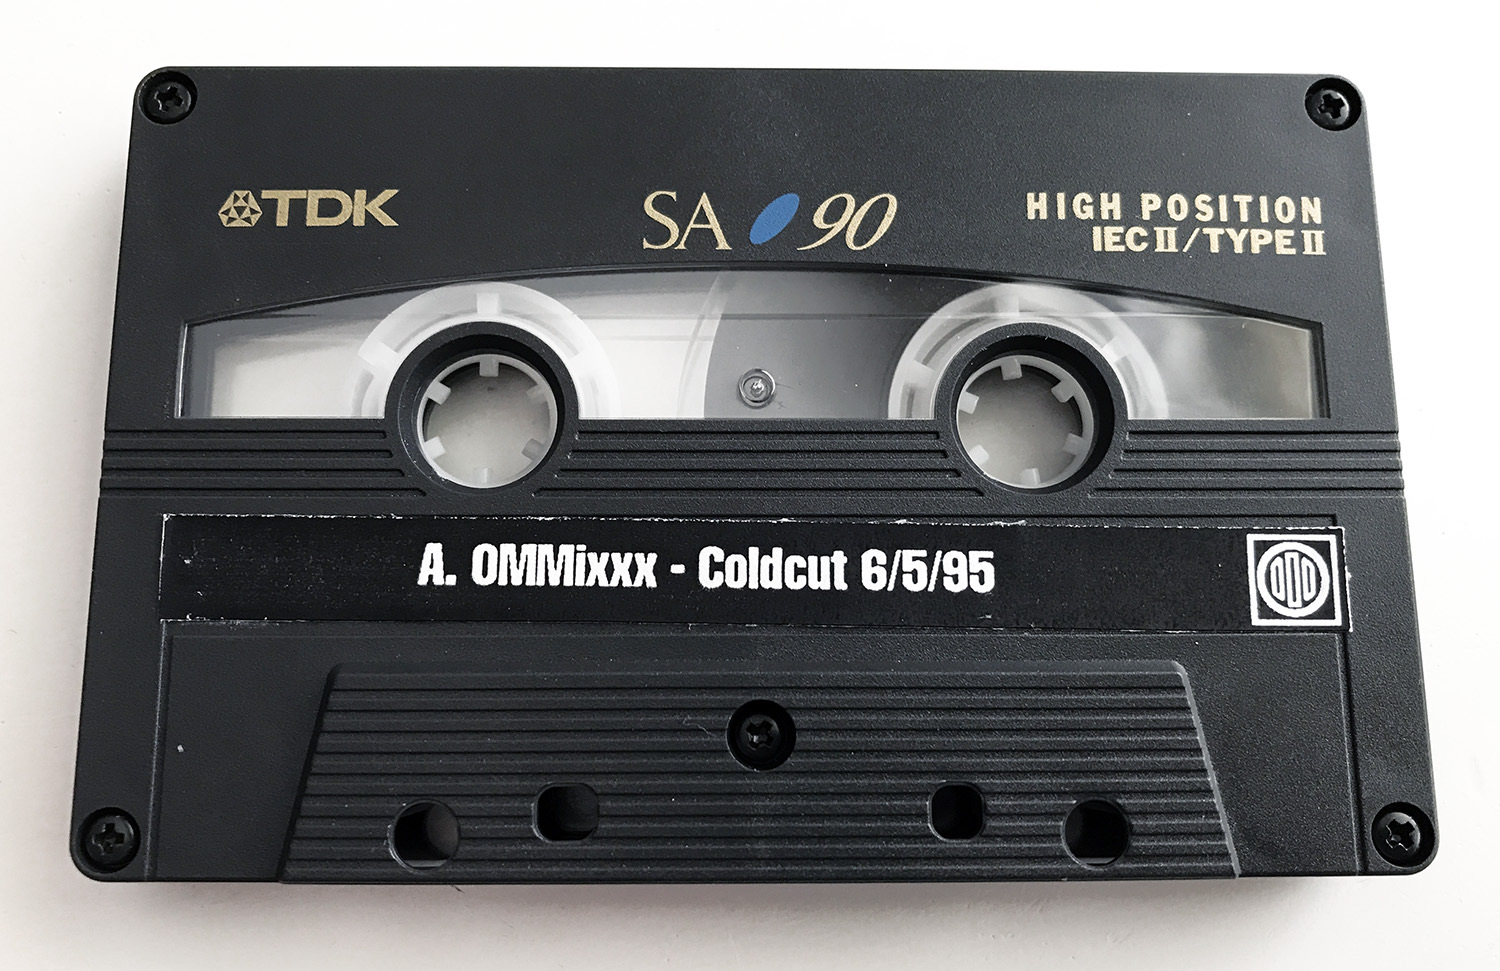 MS182 tape